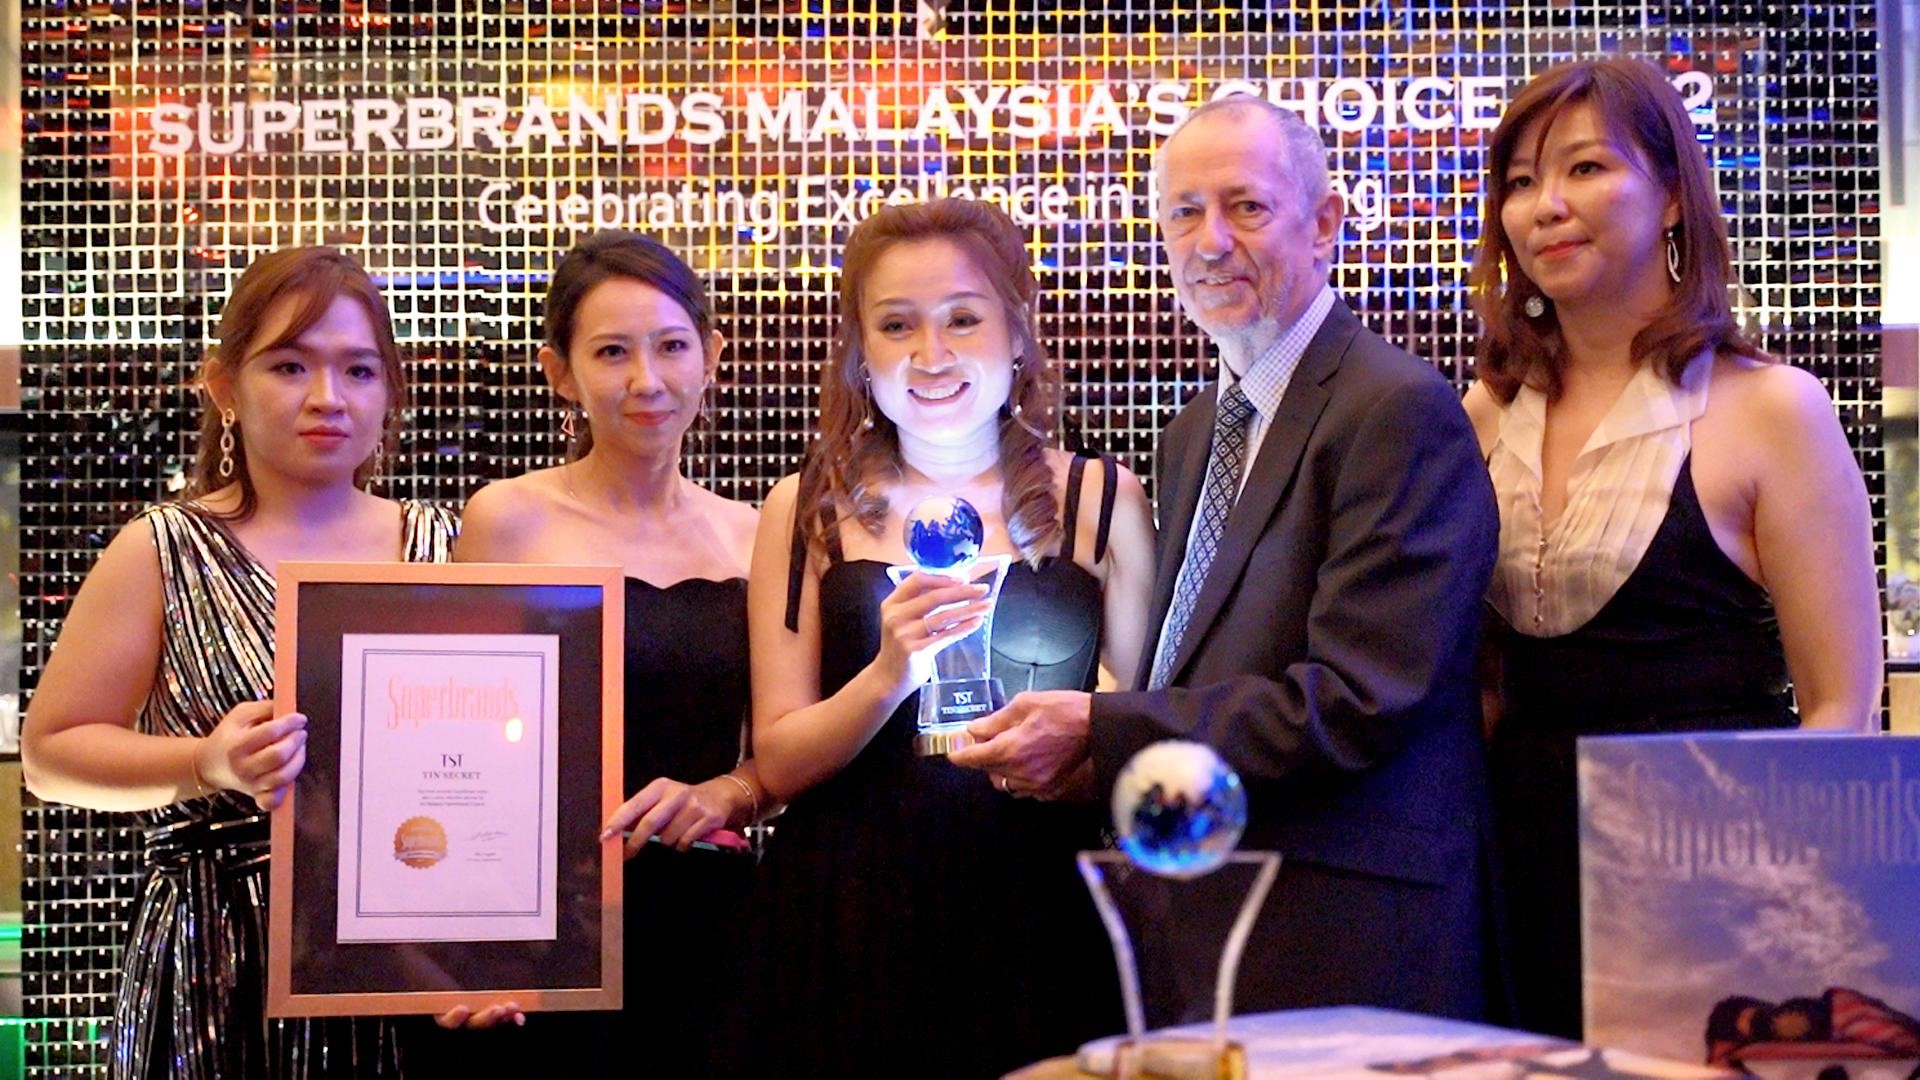 Tst malaysia wins the 2022 superbrands award | weirdkaya